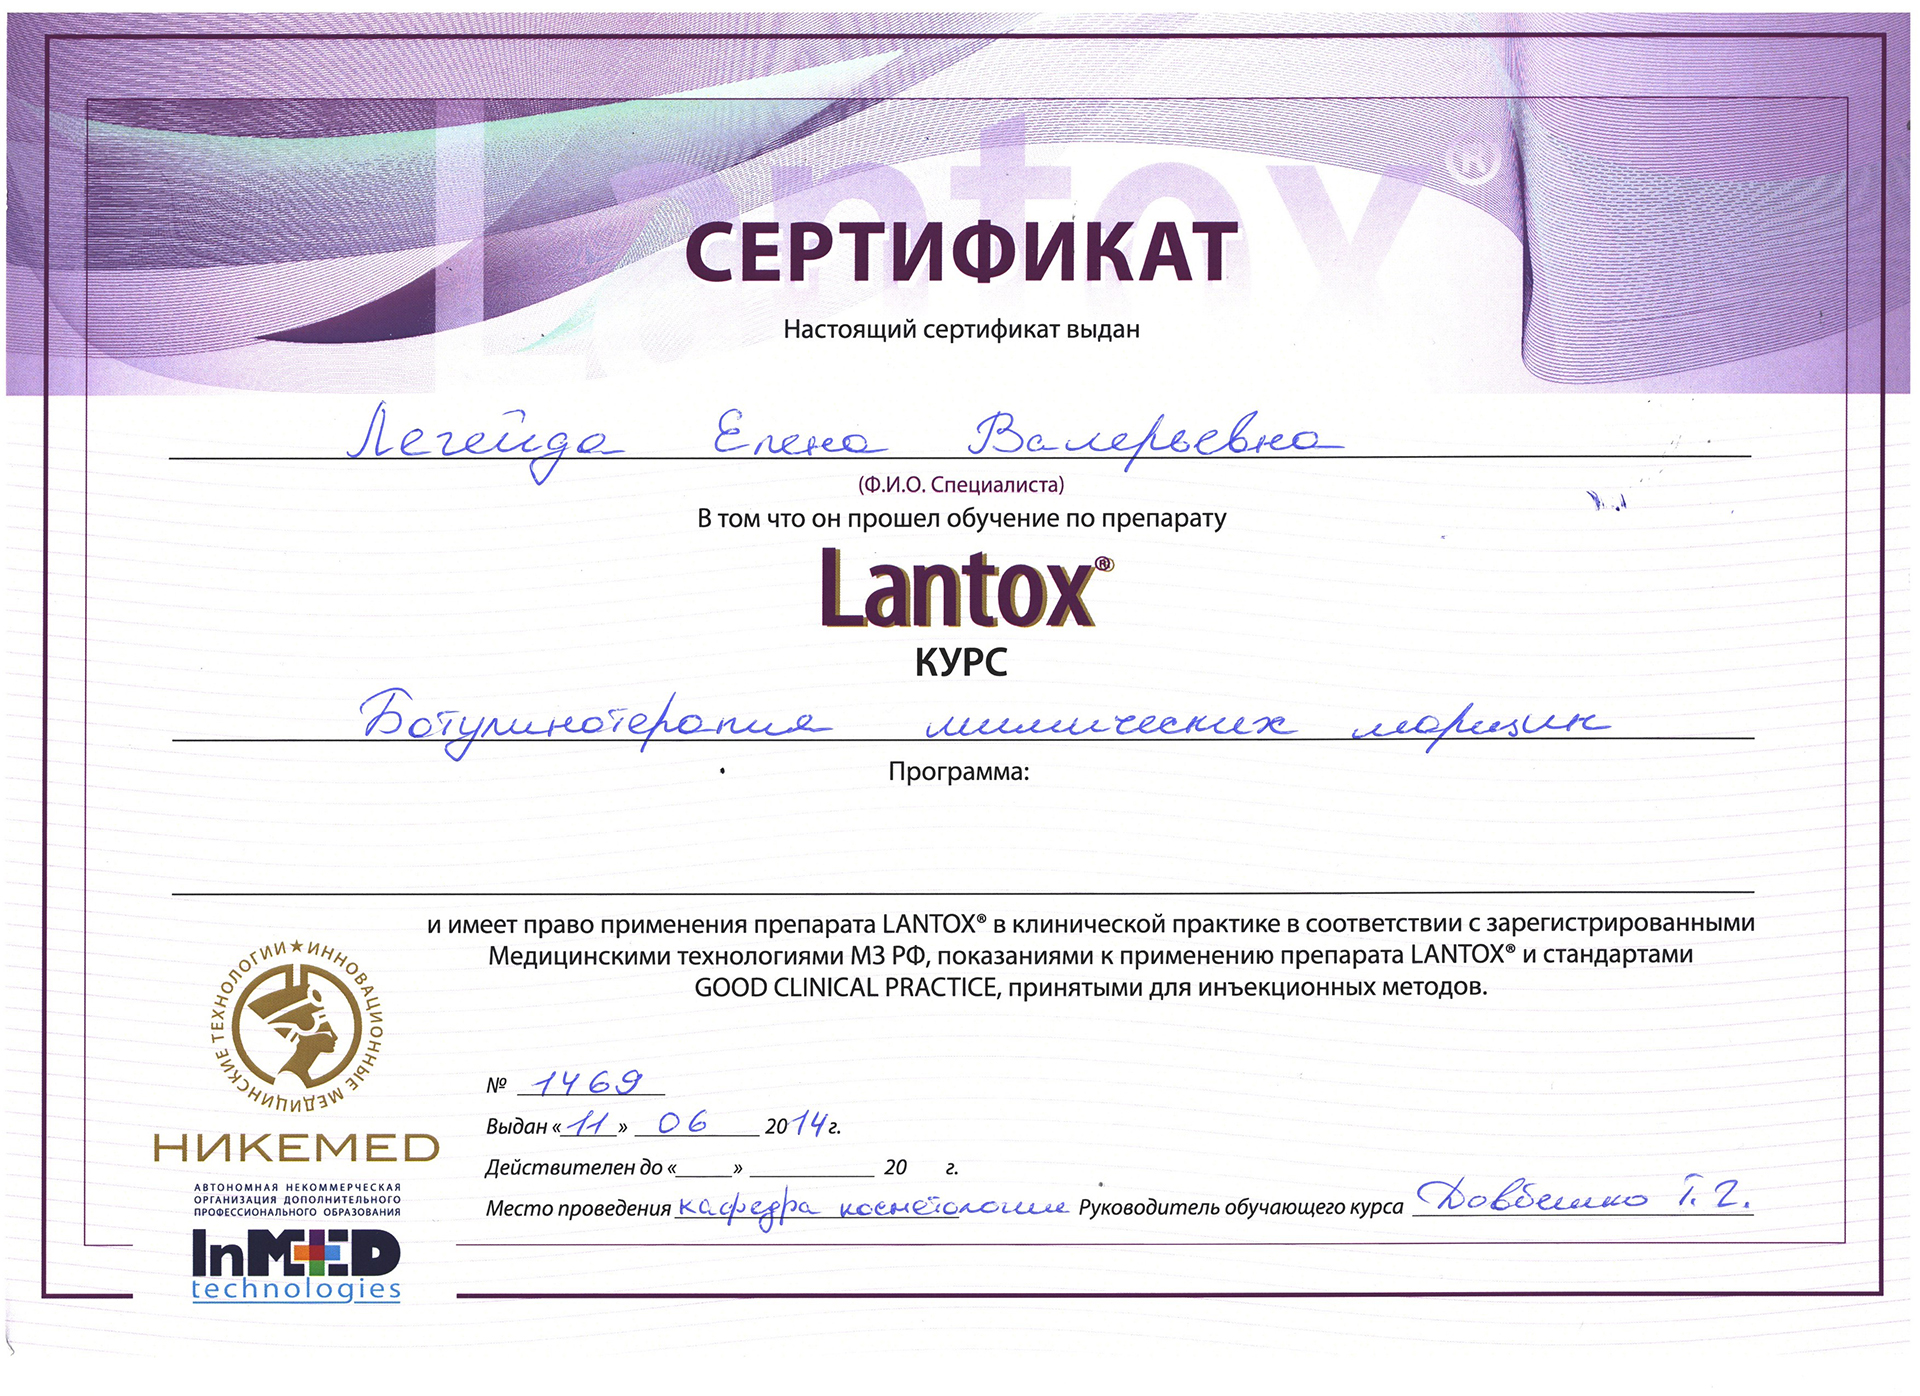 Сертификат — Обучение по препарату «Lantox». Легейда Елена Валерьевна